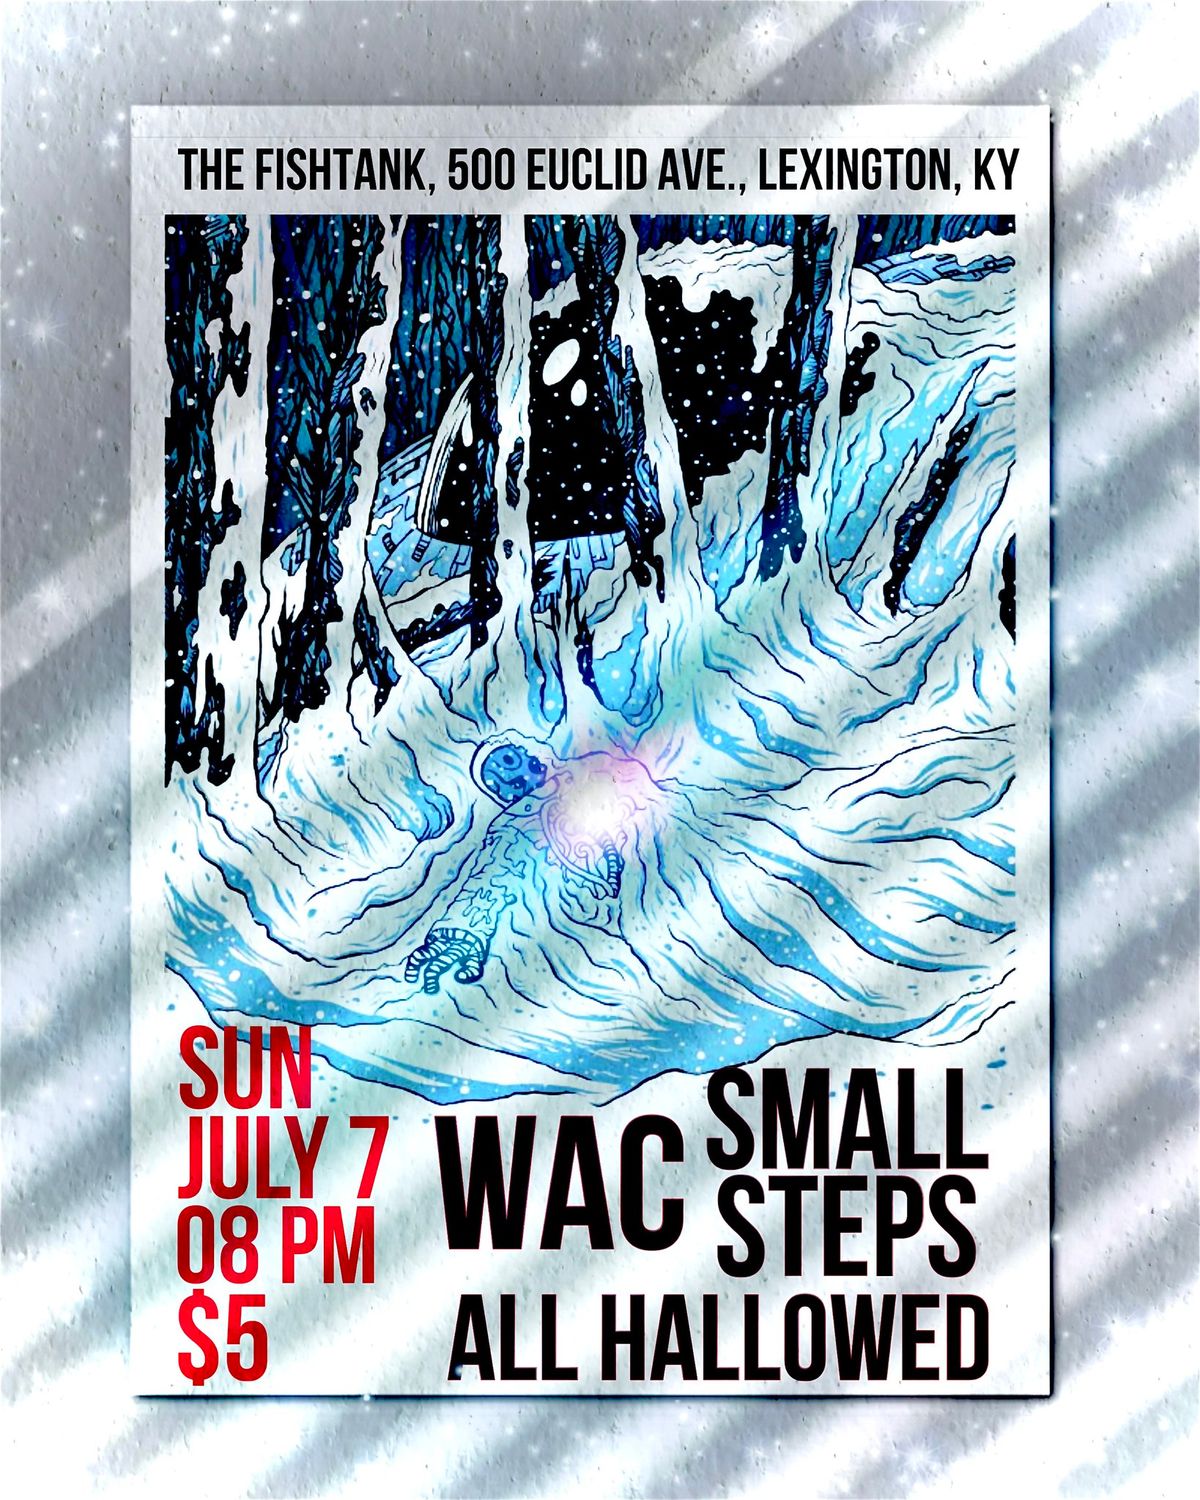 SMALL STEPS, WAC, & ALL HALLOWED @ THE FISHTANK